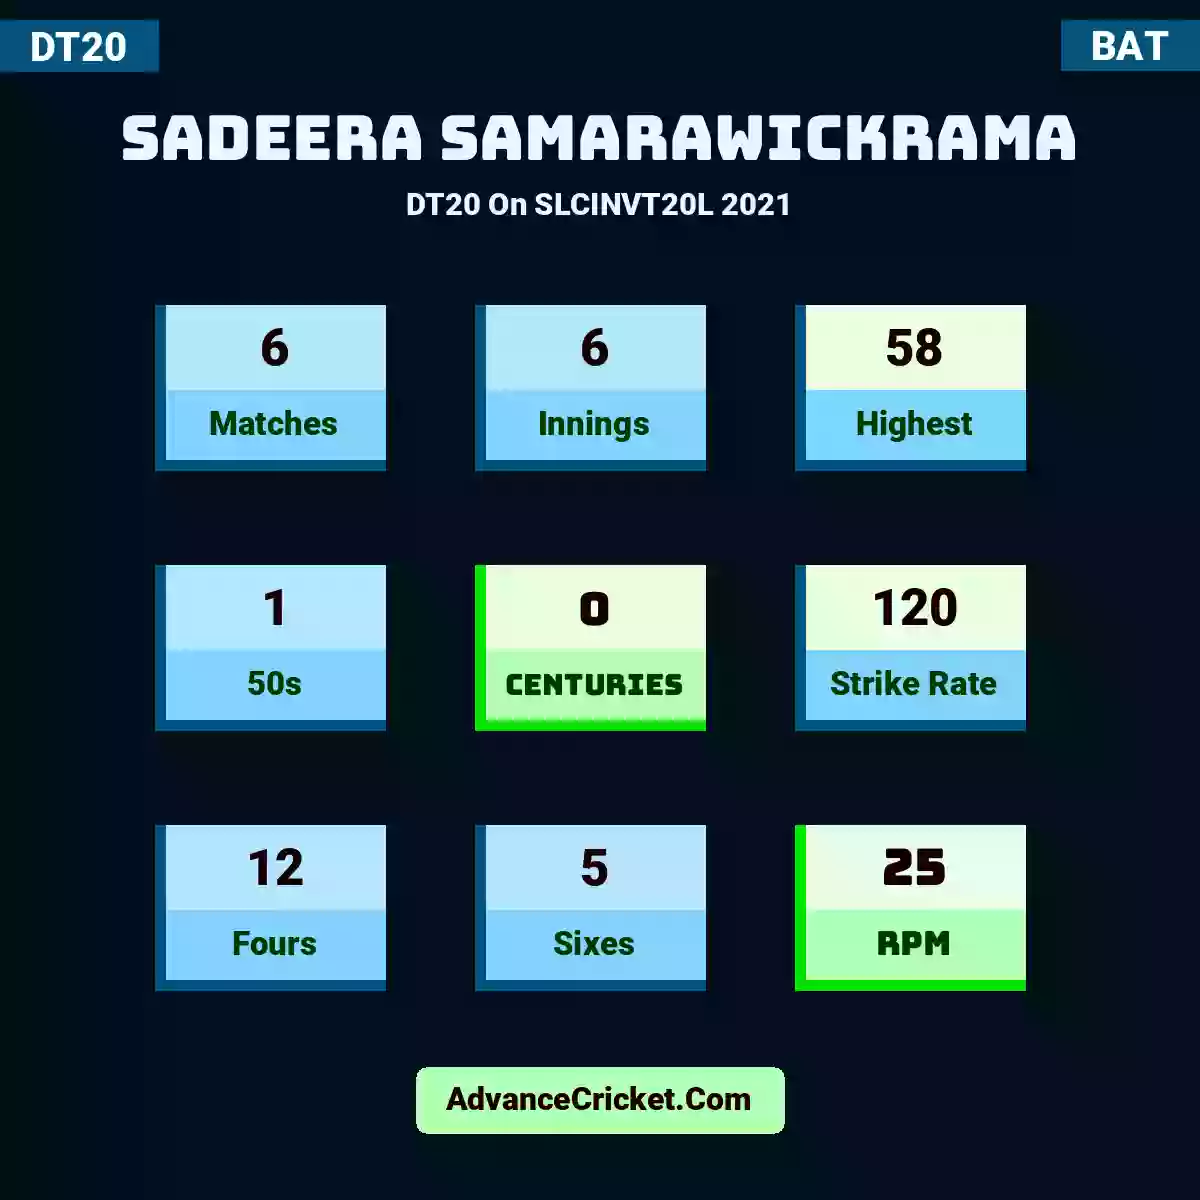 Sadeera Samarawickrama DT20  On SLCINVT20L 2021, Sadeera Samarawickrama played 6 matches, scored 58 runs as highest, 1 half-centuries, and 0 centuries, with a strike rate of 120. S.Samarawickrama hit 12 fours and 5 sixes, with an RPM of 25.